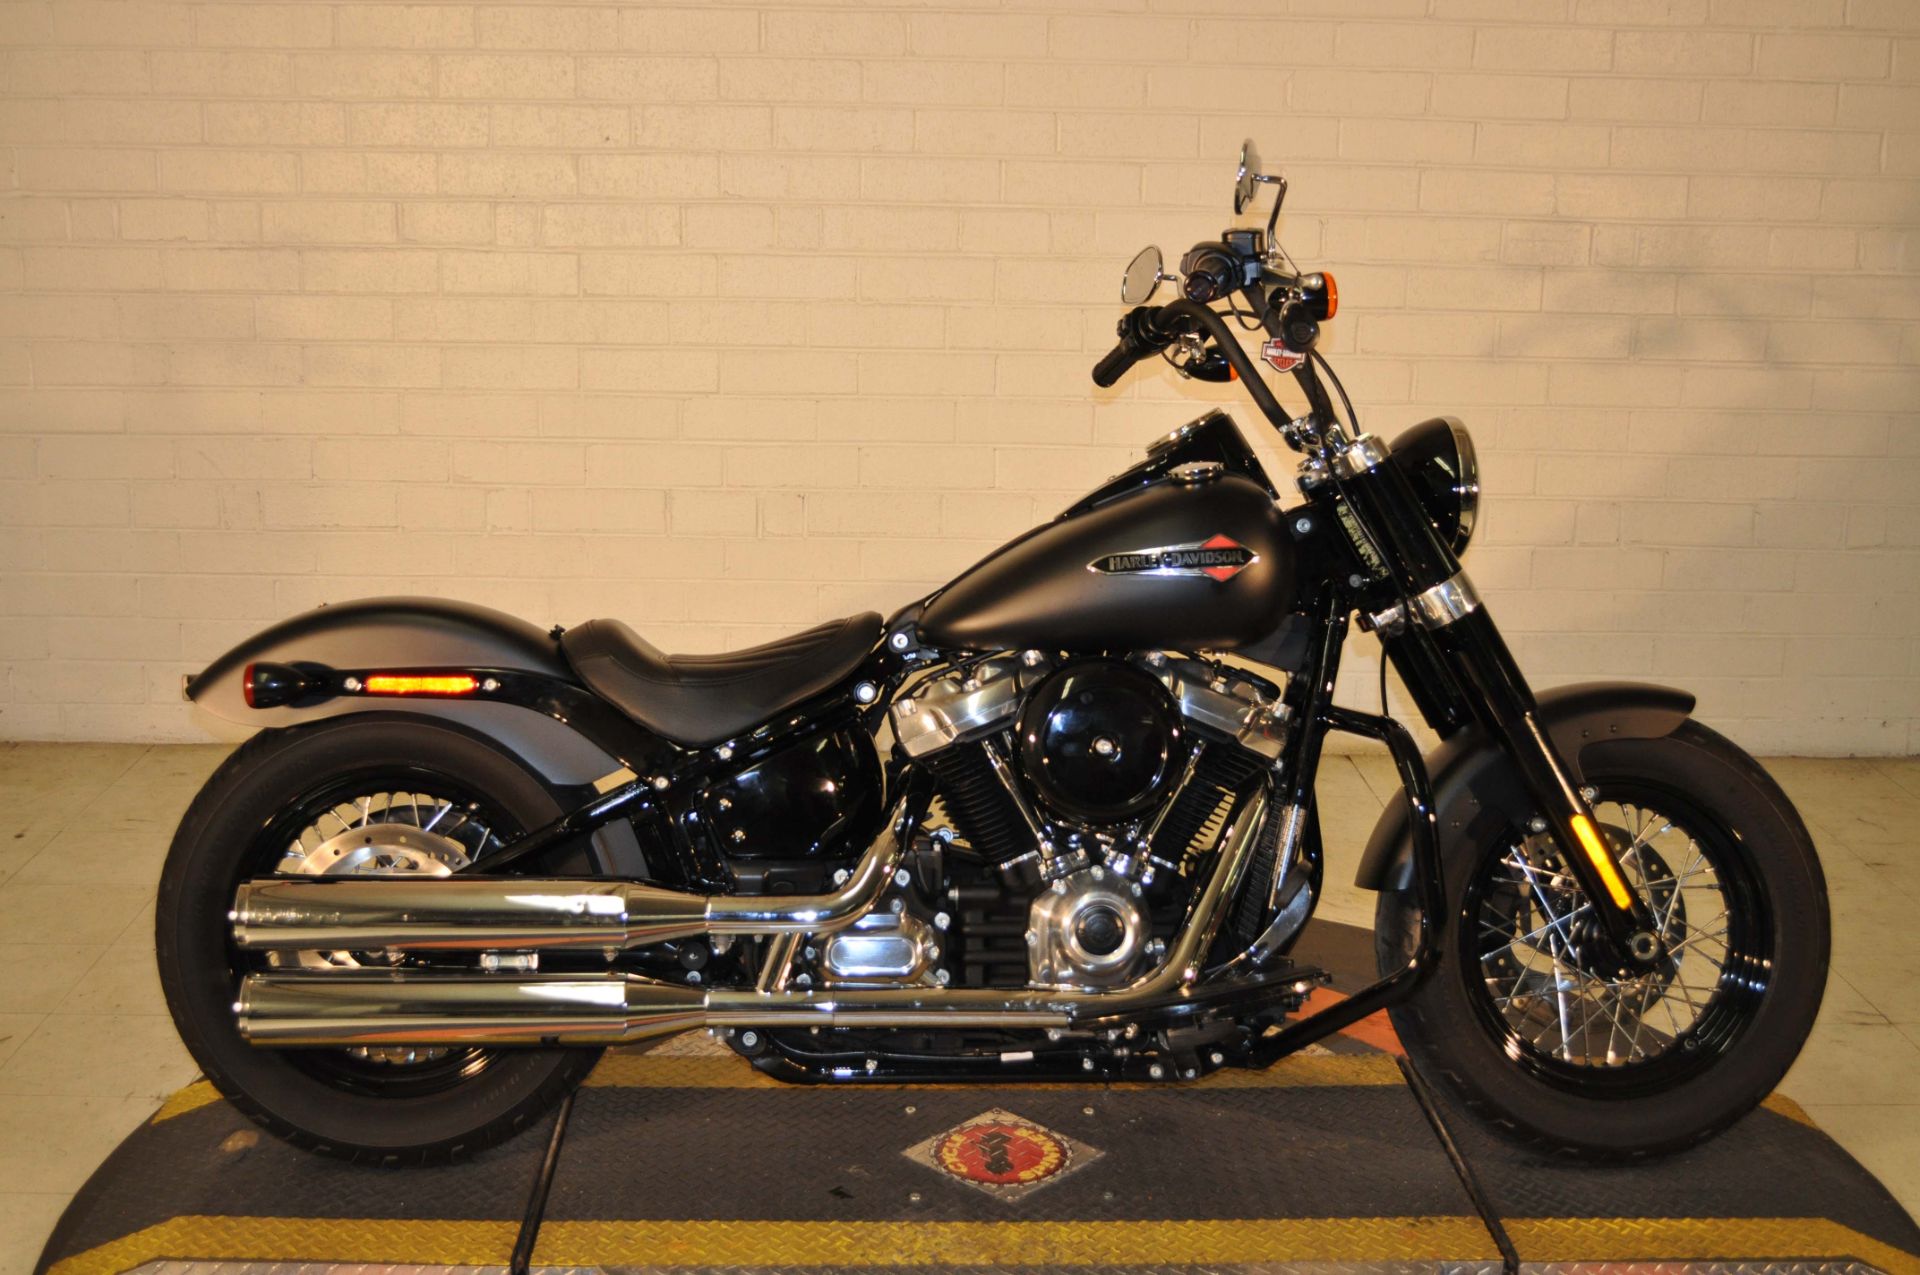 2020 Harley-Davidson Softail Slim® in Winston Salem, North Carolina - Photo 1